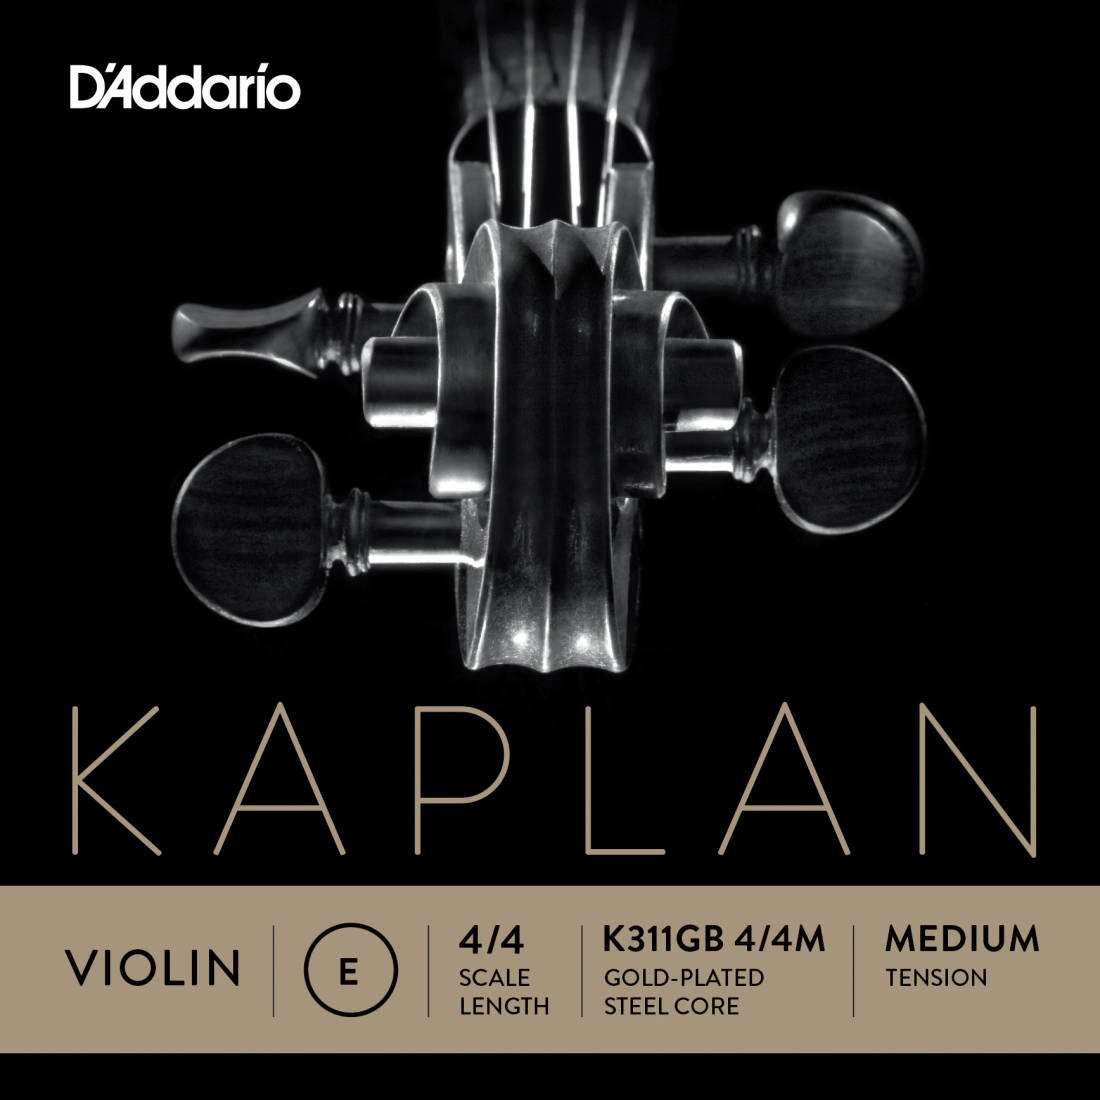 K311GB 4/4M - Kaplan Gold-Plated Ball End Violin Single E String, 4/4 Scale, Medium Tension